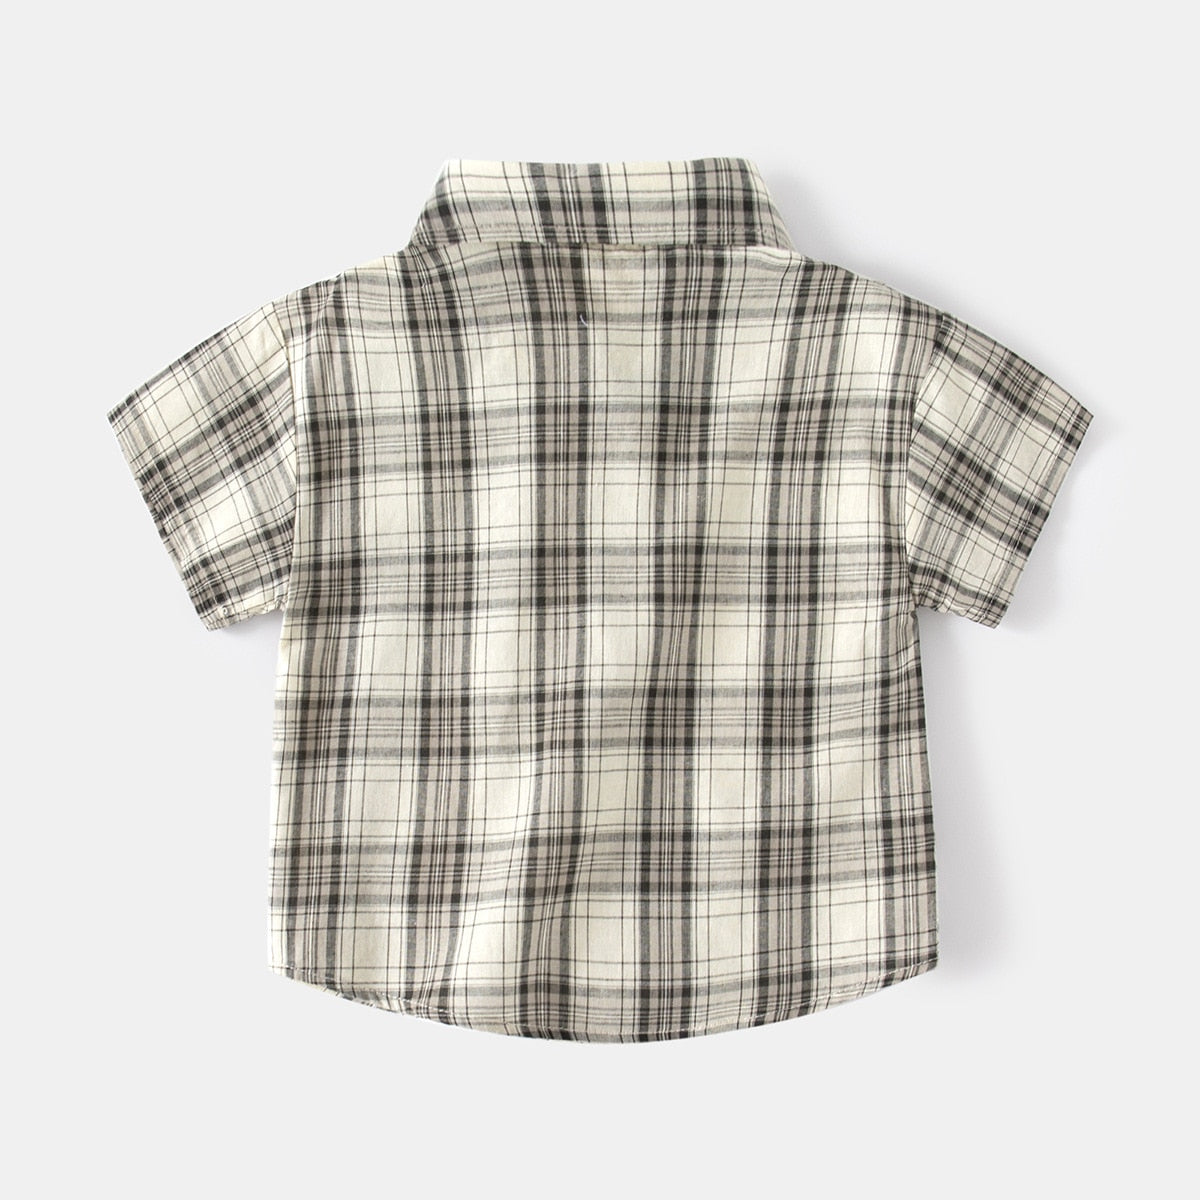 Toddler Boys Plaid Short Sleeve shirt